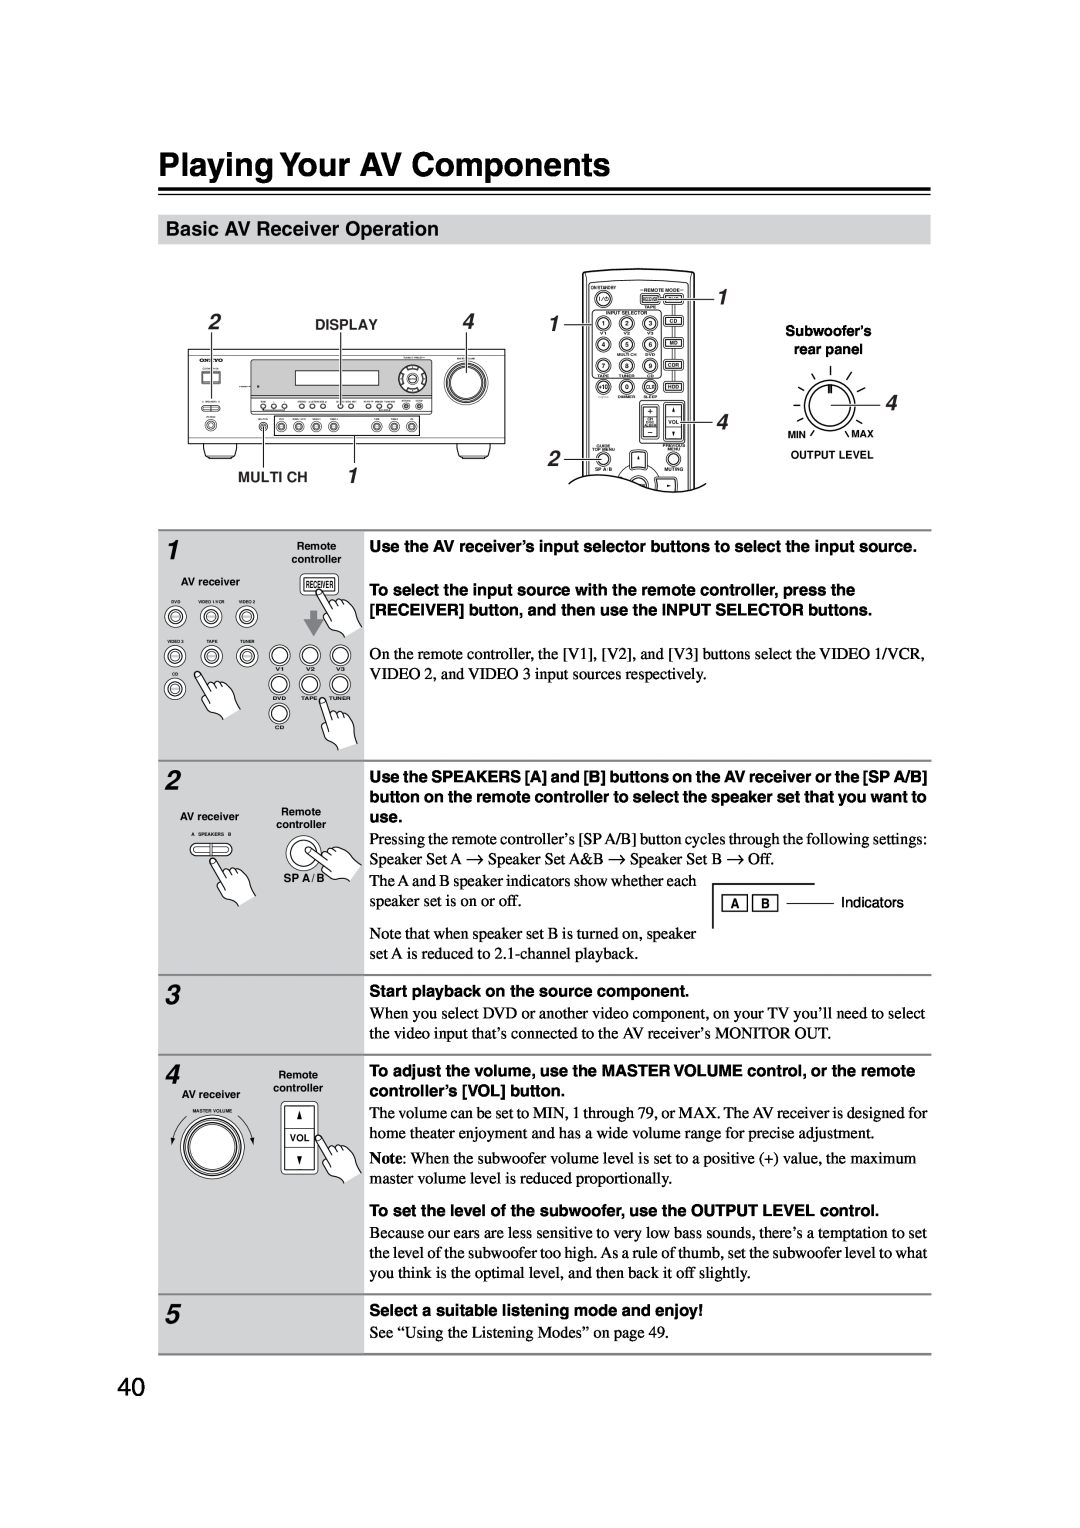 Onkyo HT-S4100 instruction manual Playing Your AV Components, Basic AV Receiver Operation 